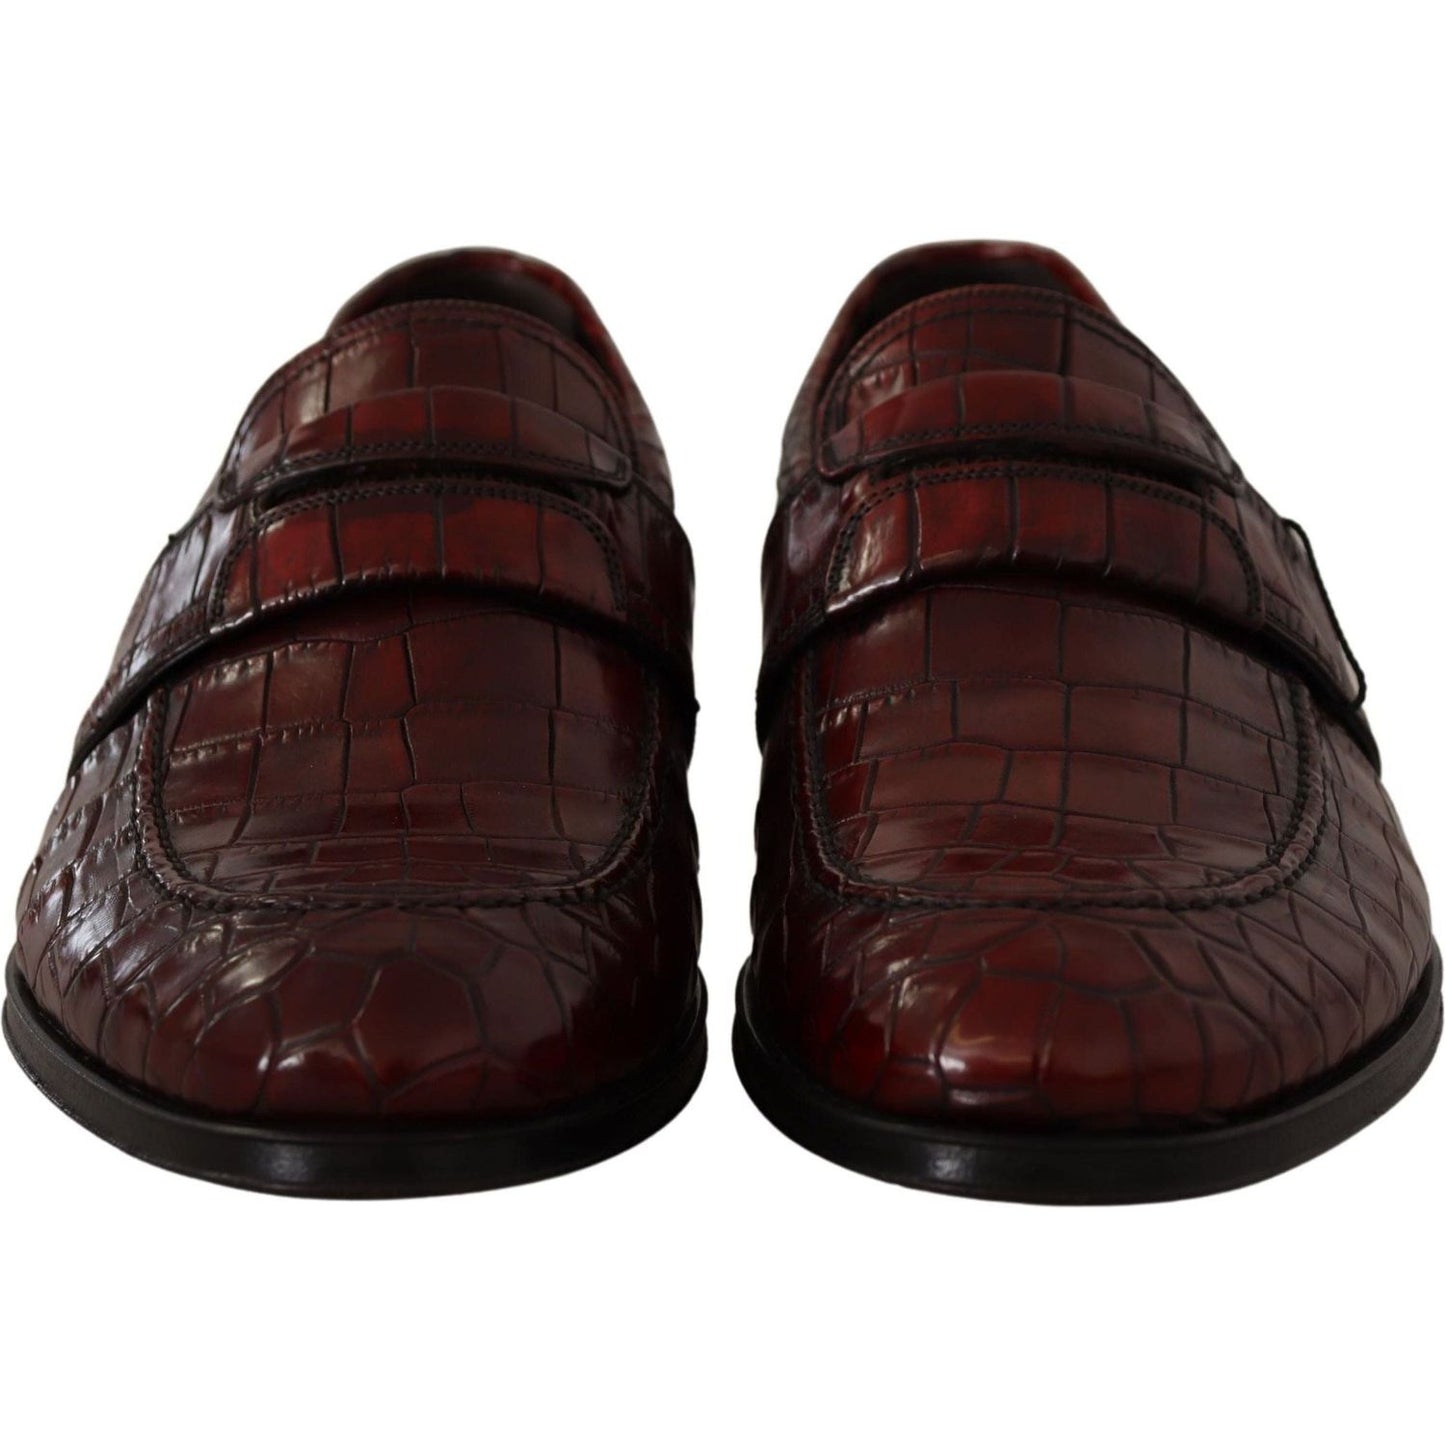 Dolce & Gabbana Exotic Croc Leather Bordeaux Loafers bordeaux-exotic-leather-dress-derby-shoes IMG_2081-9fc56c11-ab1.jpg